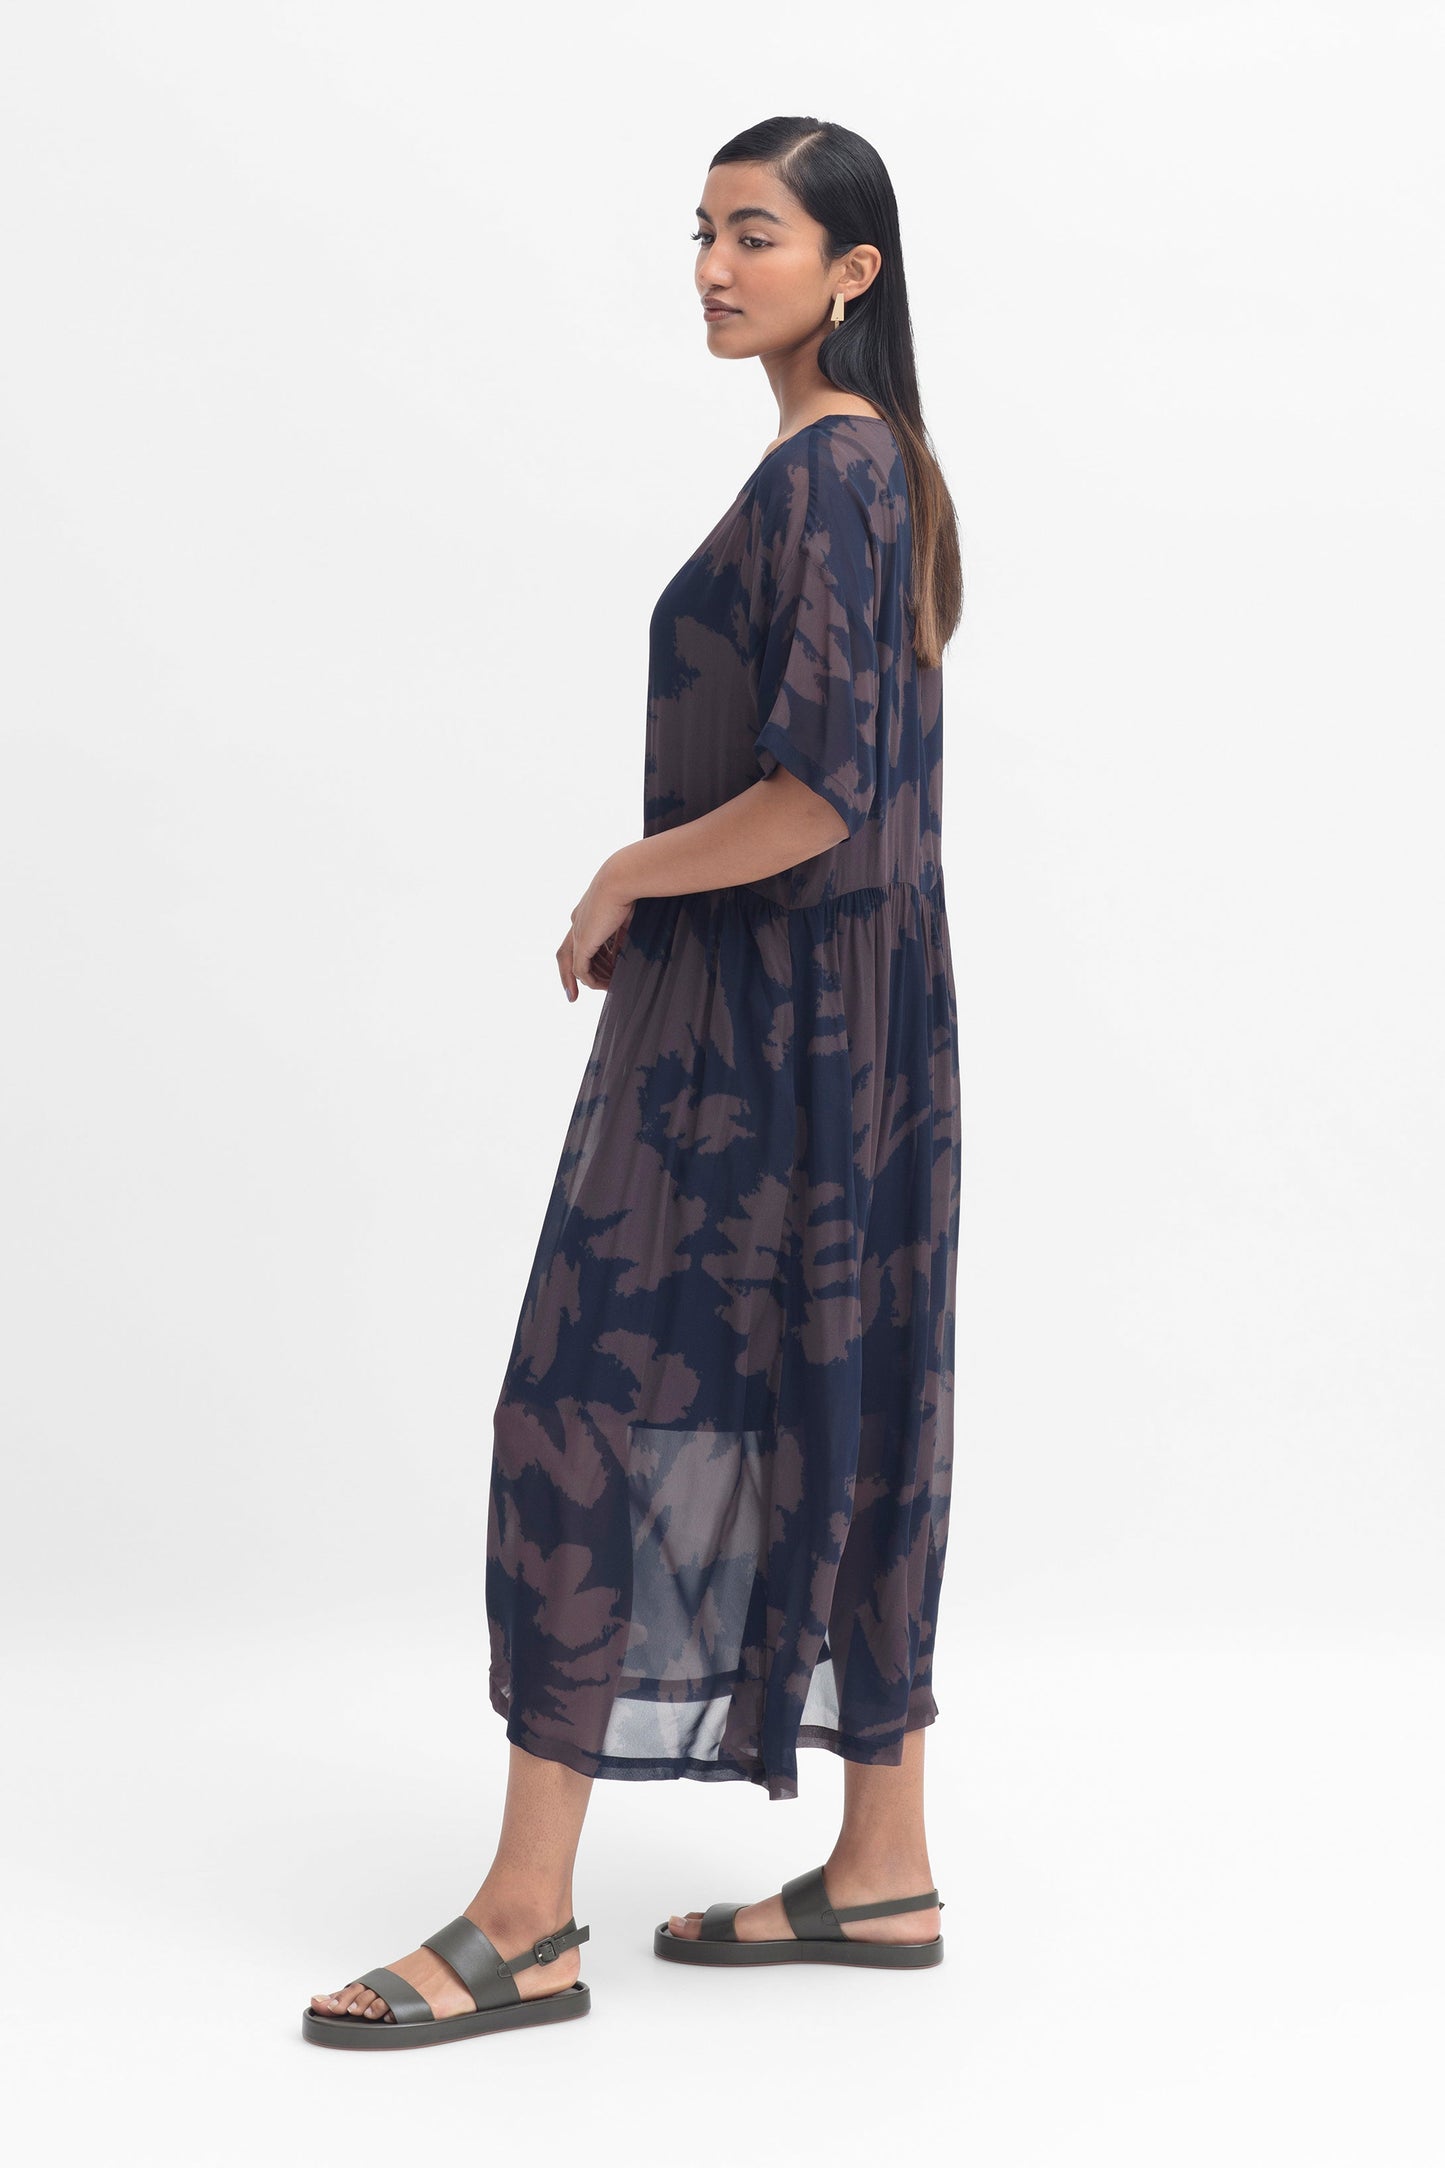 Ravnen Print Sheer Dress and Slip Model Side | CHOCOLATE NAEMI PRINT